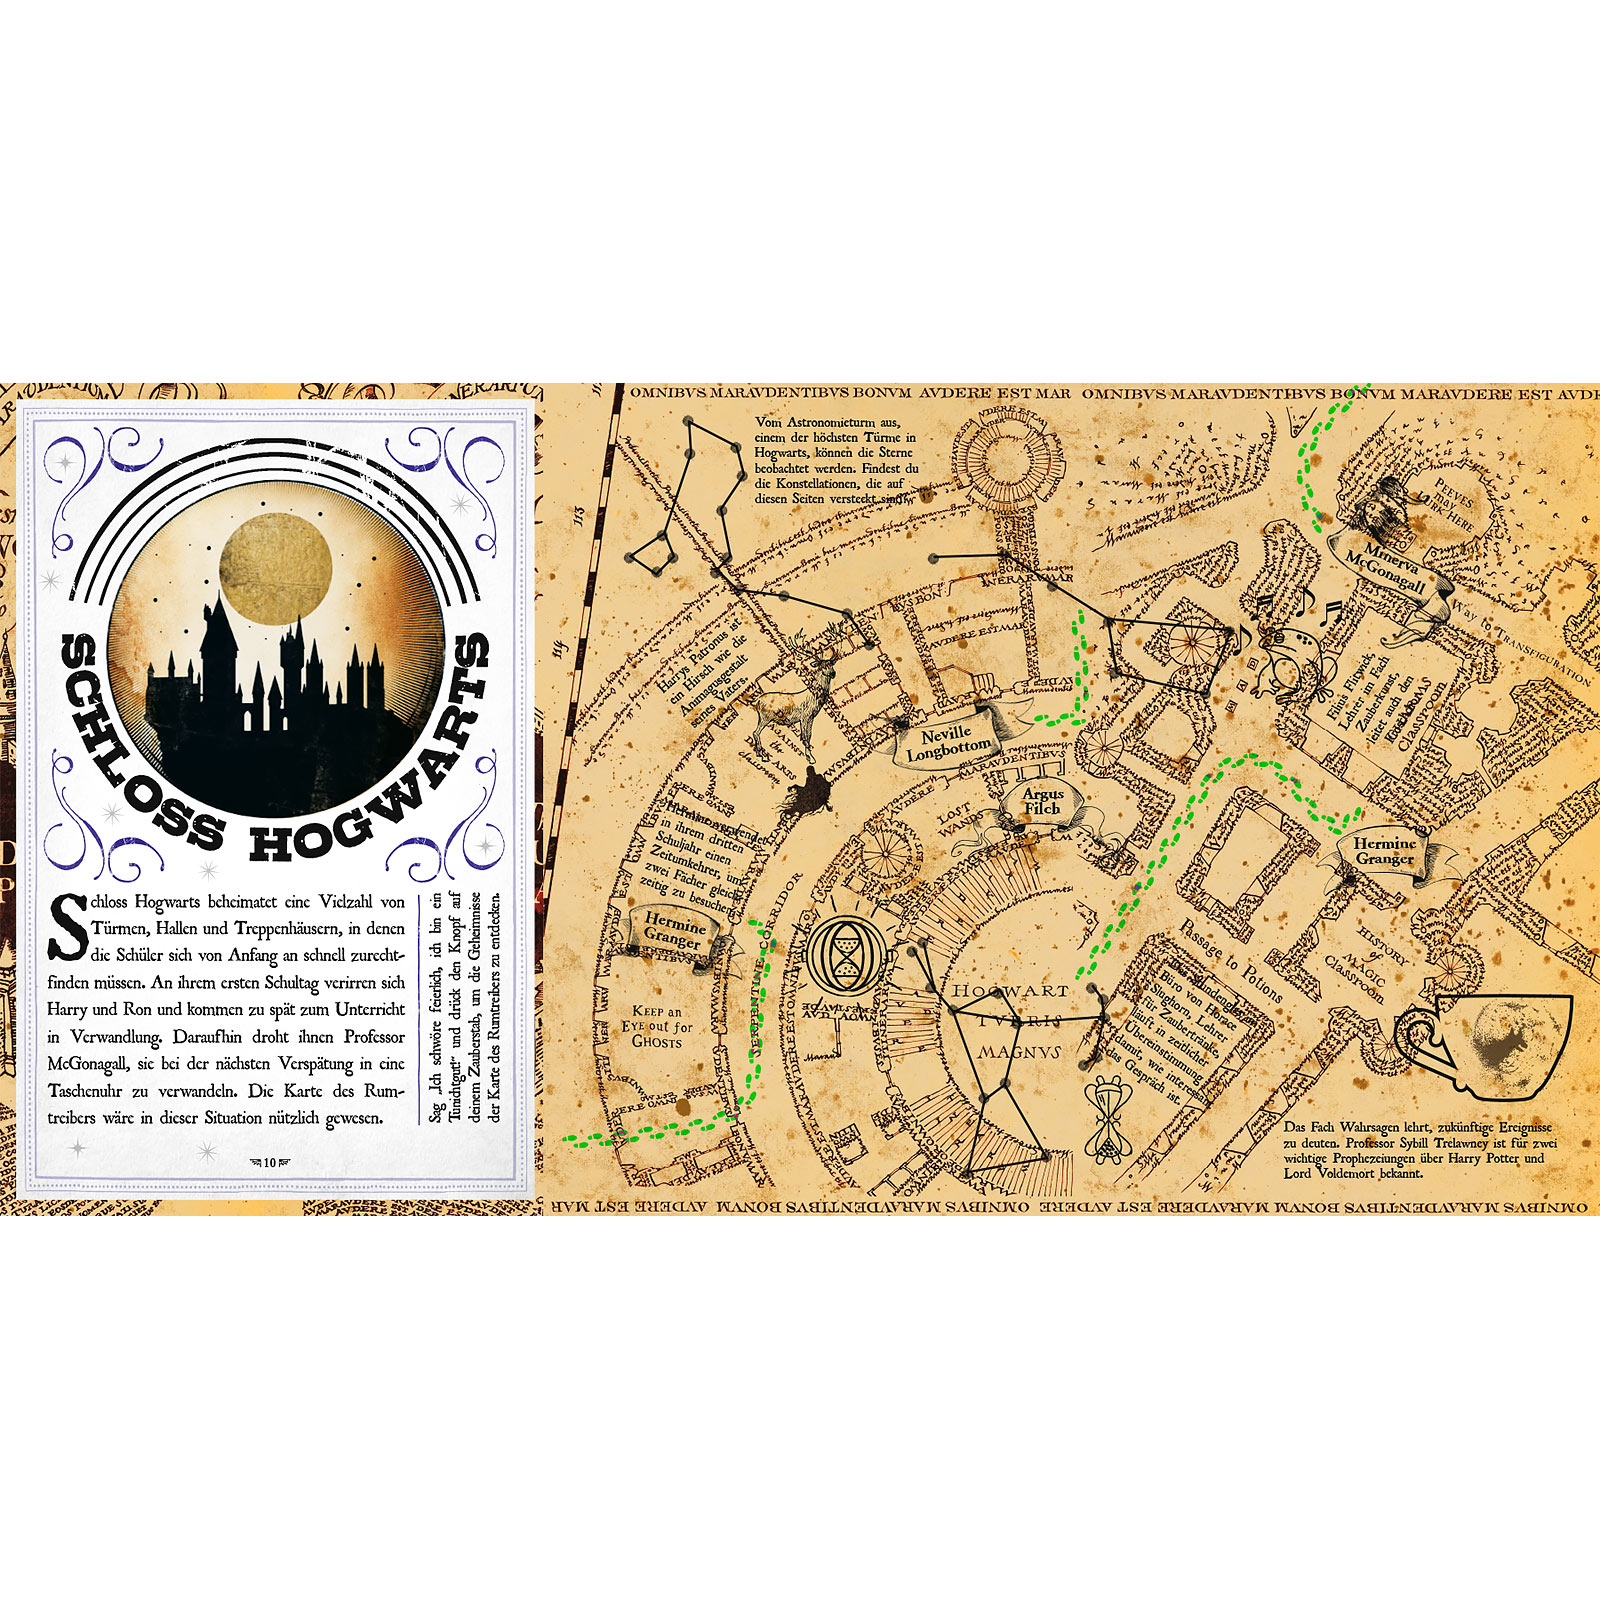 Harry Potter - The Marauder's Map - A Journey Through Hogwarts